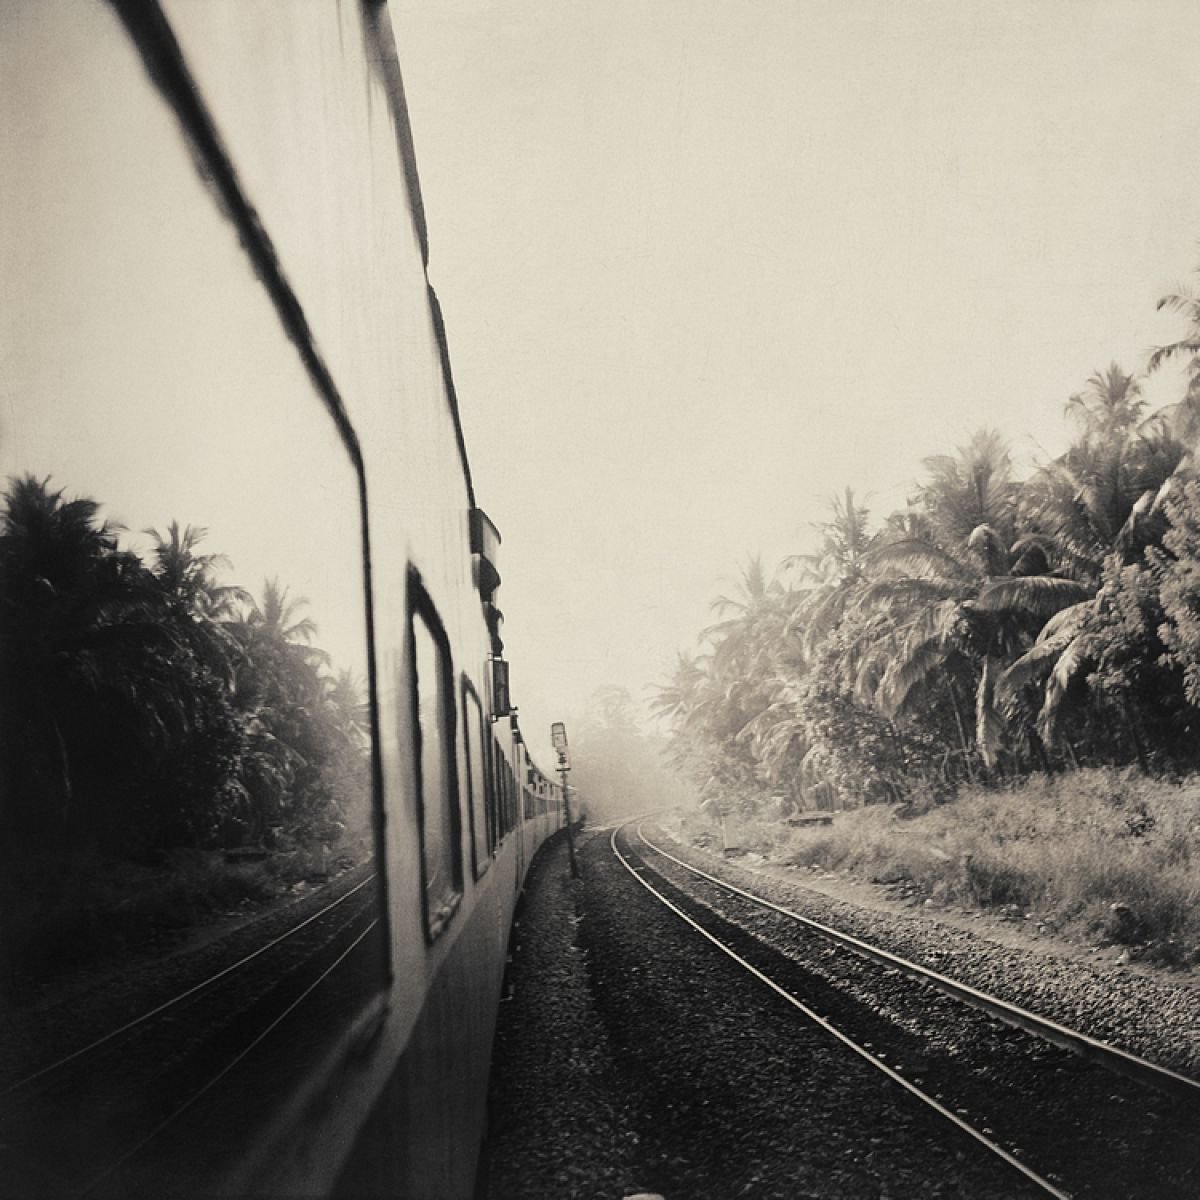 Konkan black and white by Nadia Attura